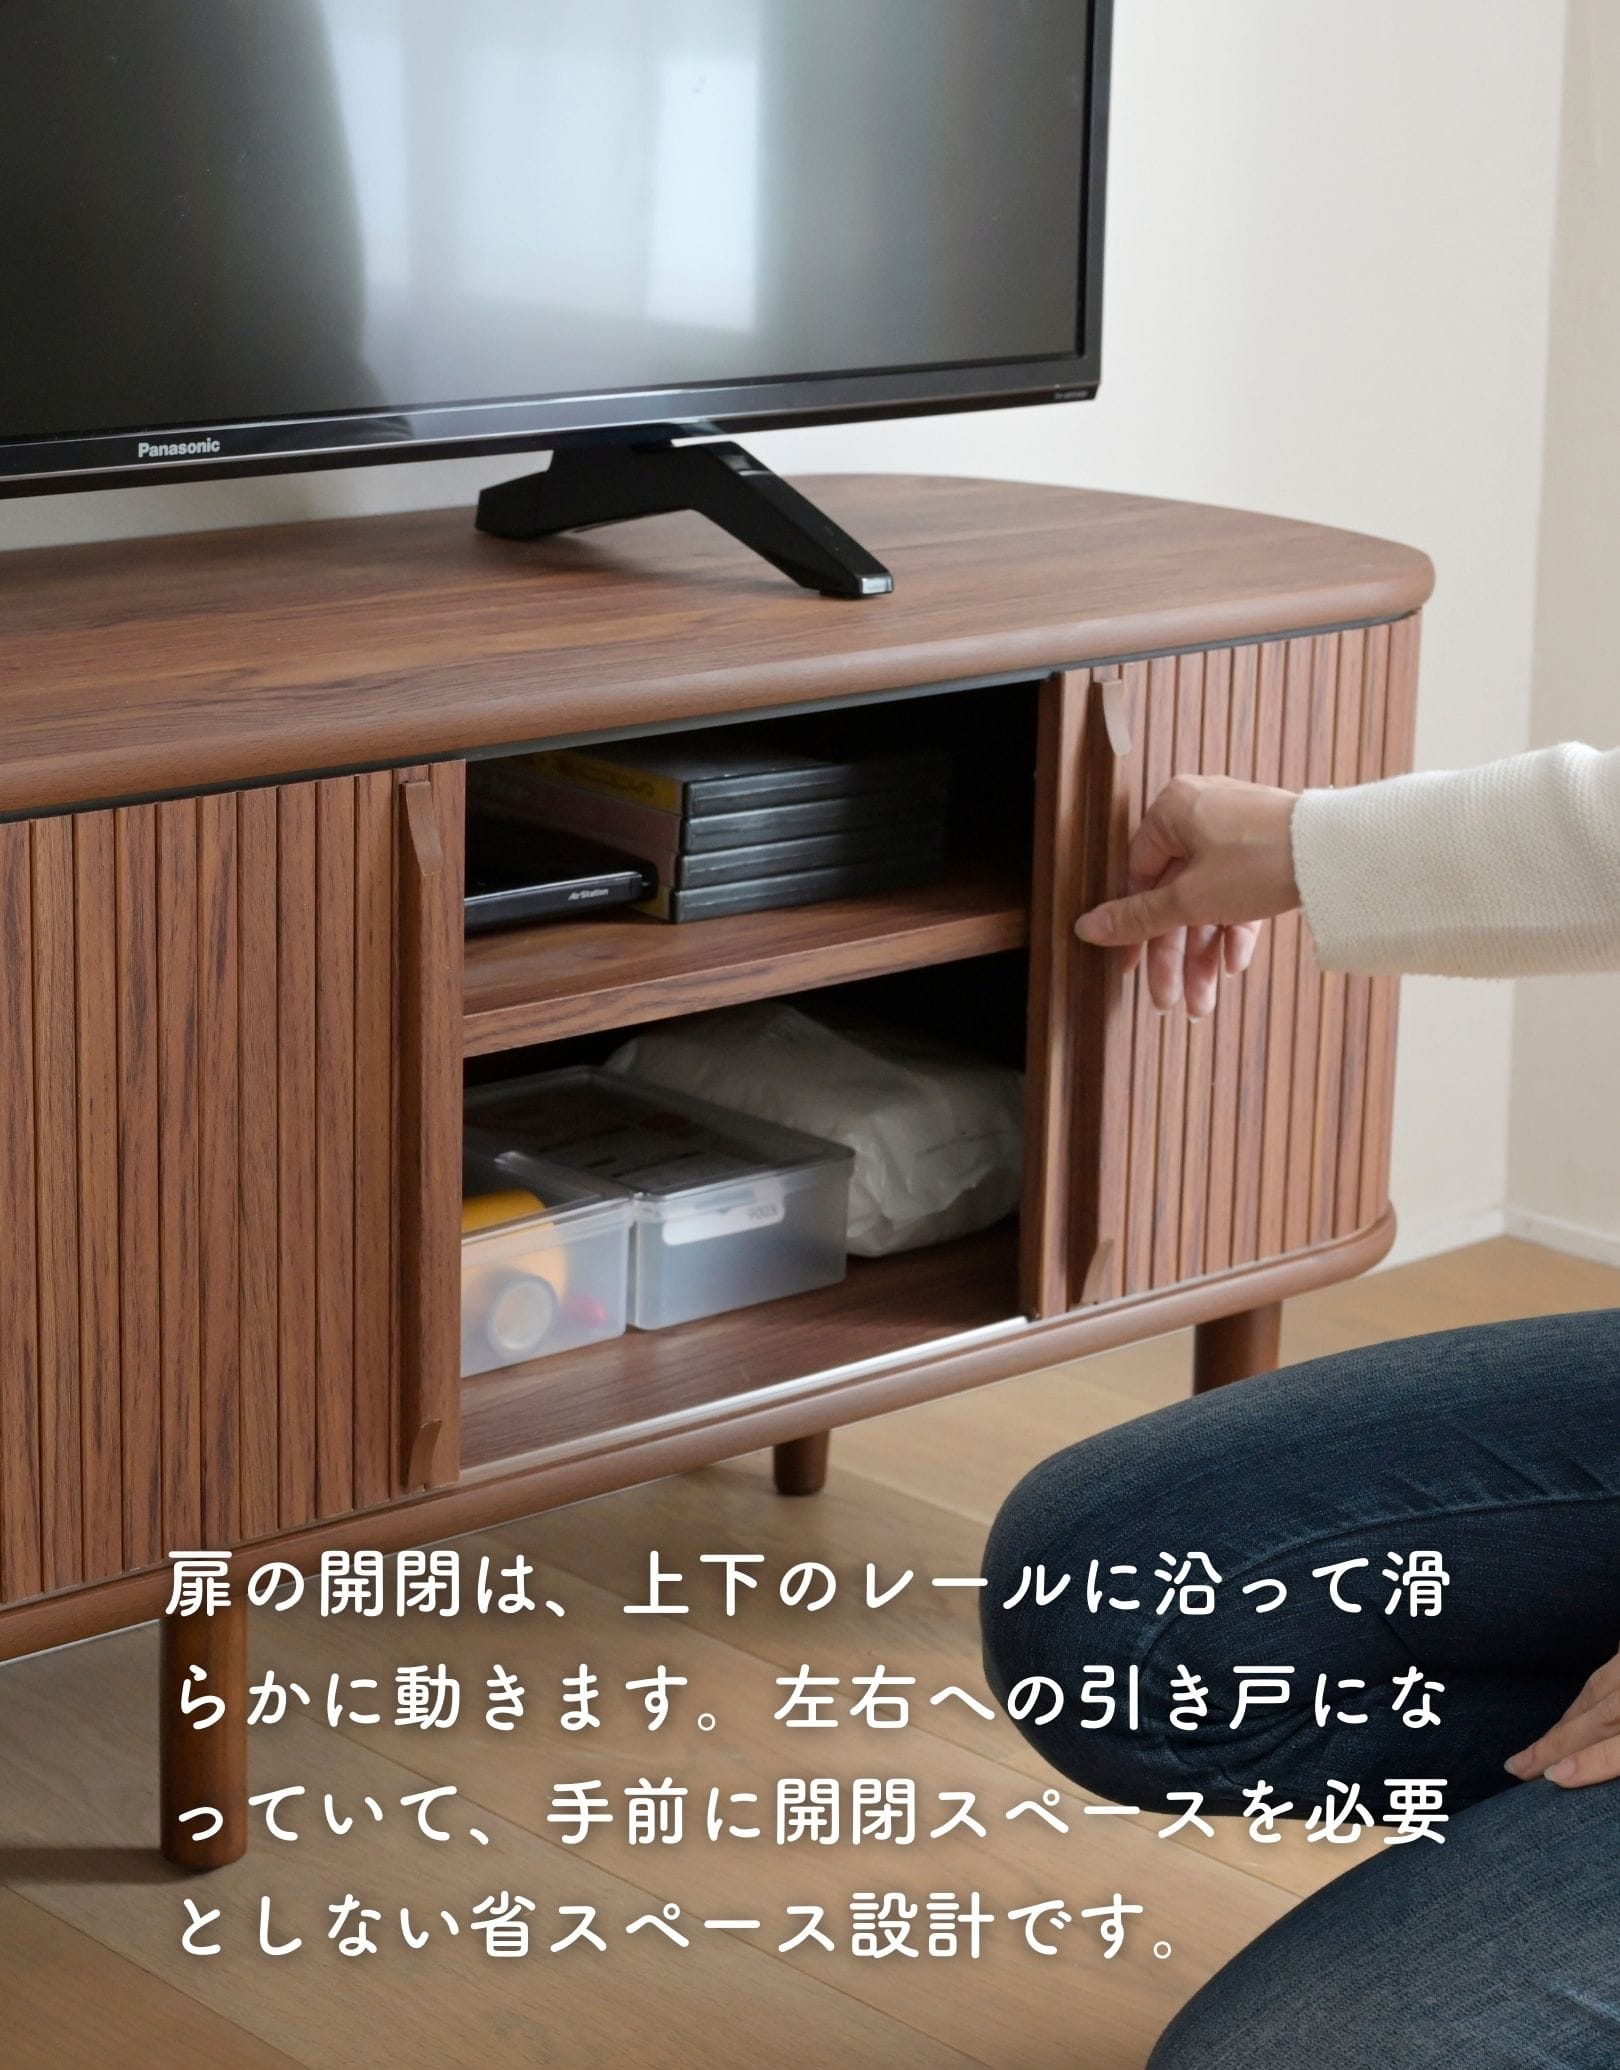 Panasonic 37インチ液晶テレビ テレビ台セット - 大阪府の家電